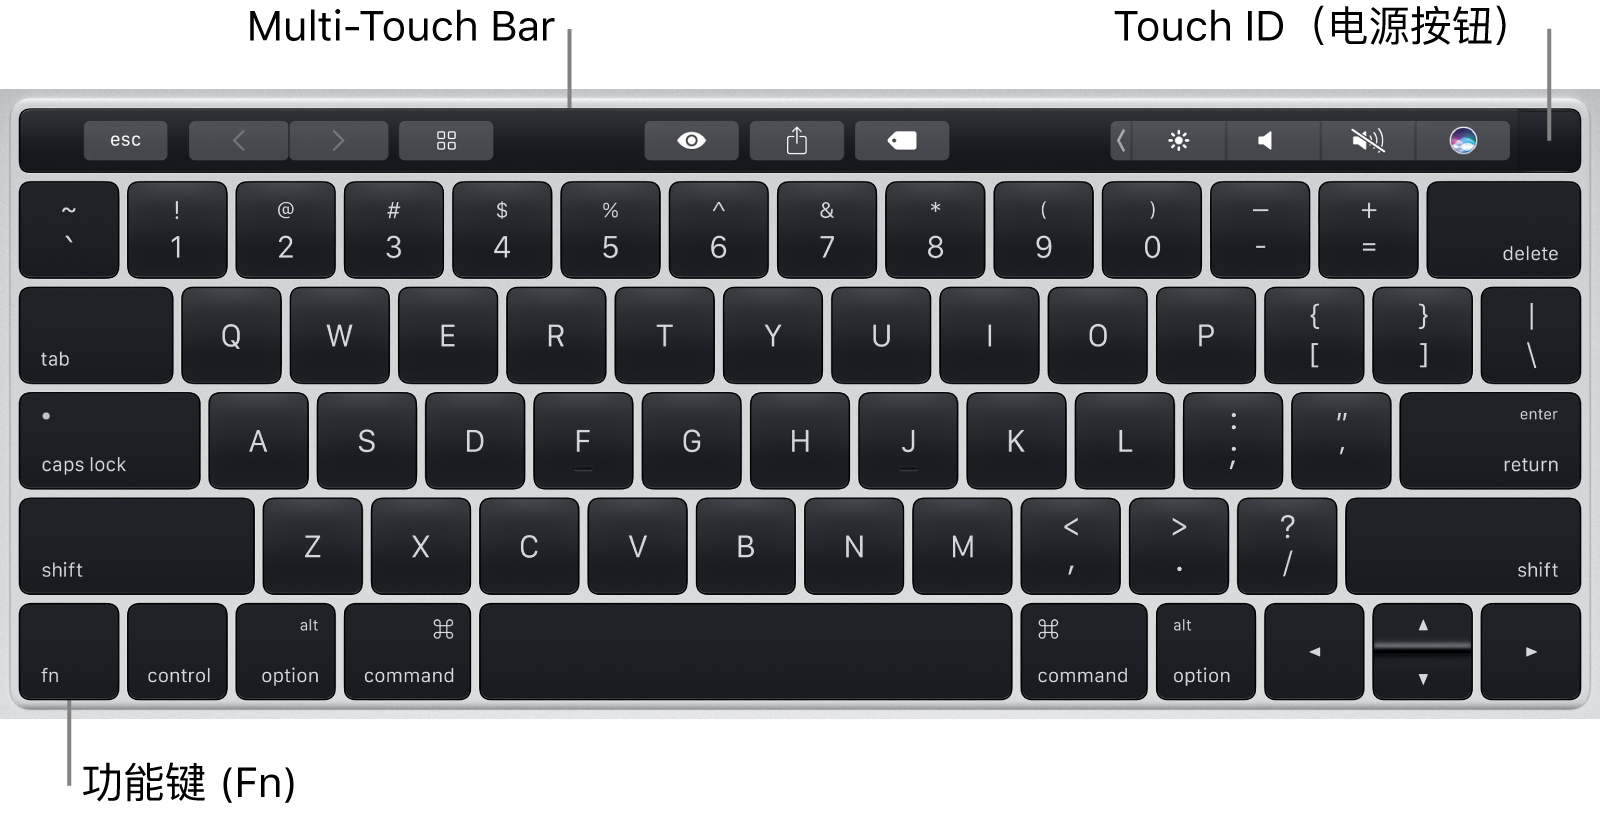 1MacBook Pro 键盘，显示 Multi-Touch Bar、Touch ID（电源按钮）以及左下角的 Fn 功能键